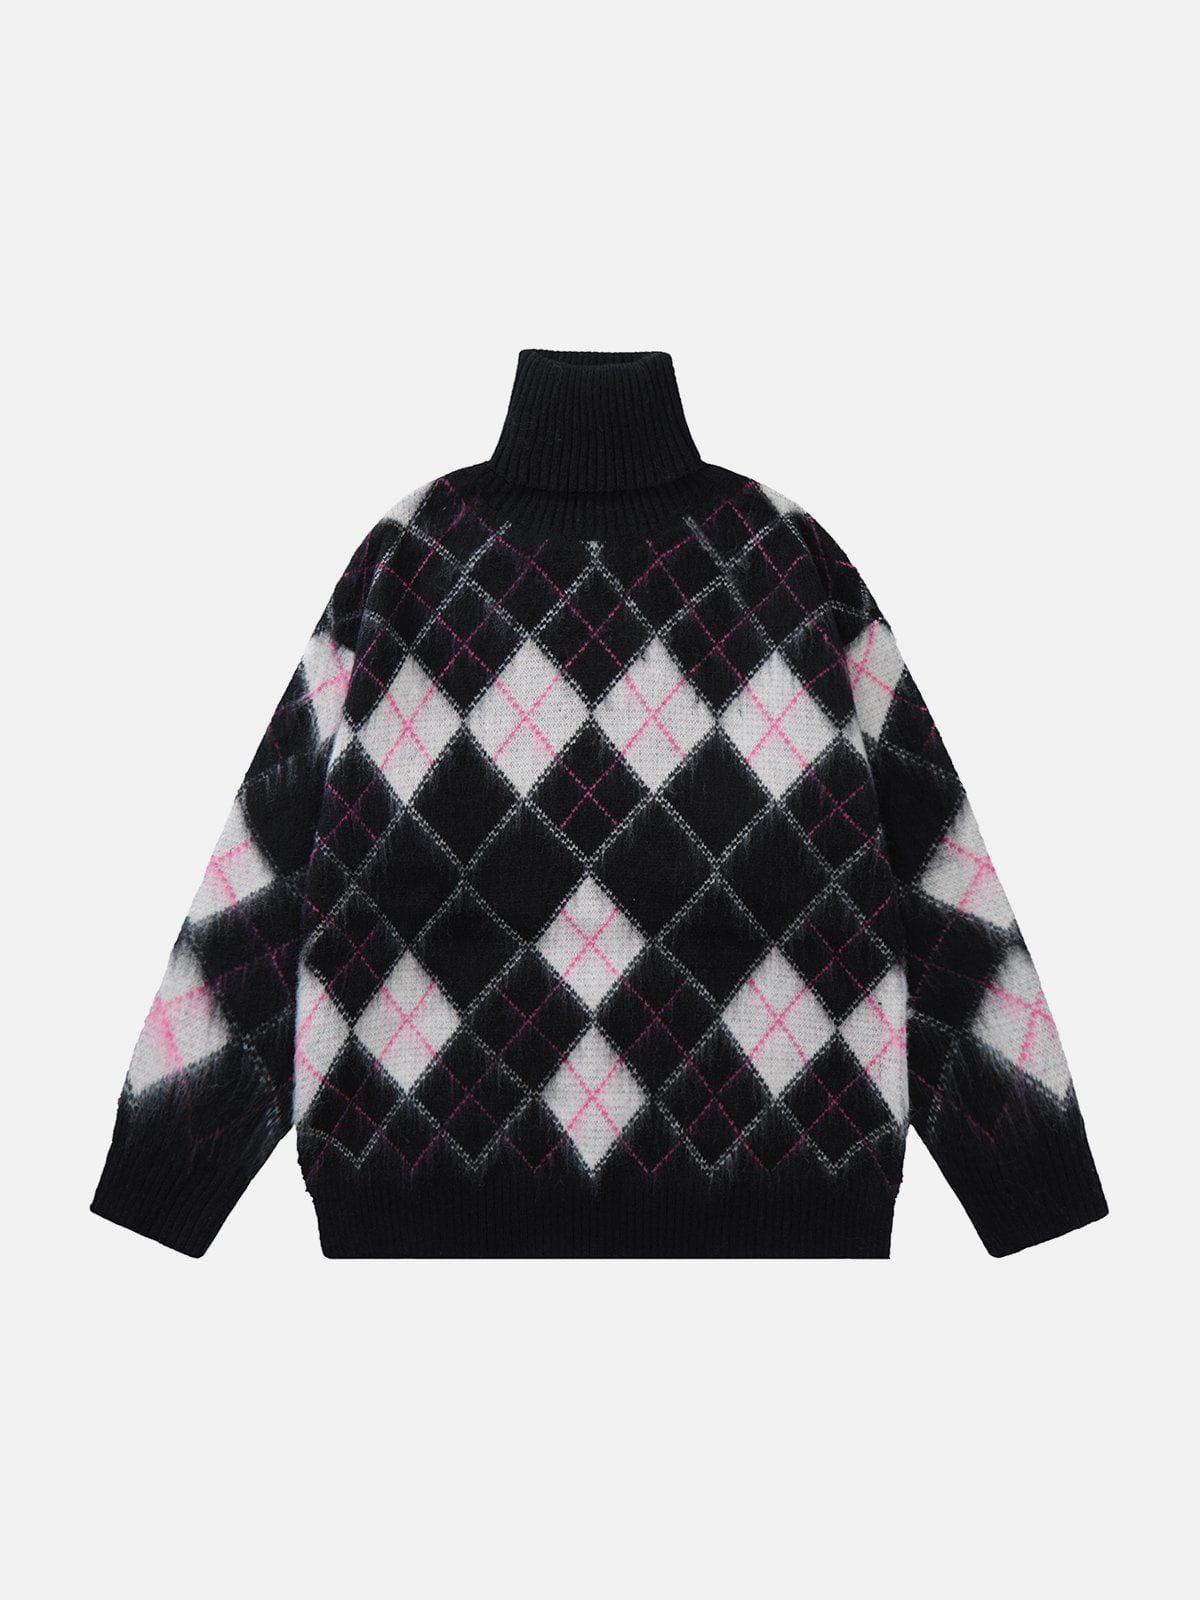 Majesda® - High Neck Diamond Color Block Sweater outfit ideas streetwear fashion